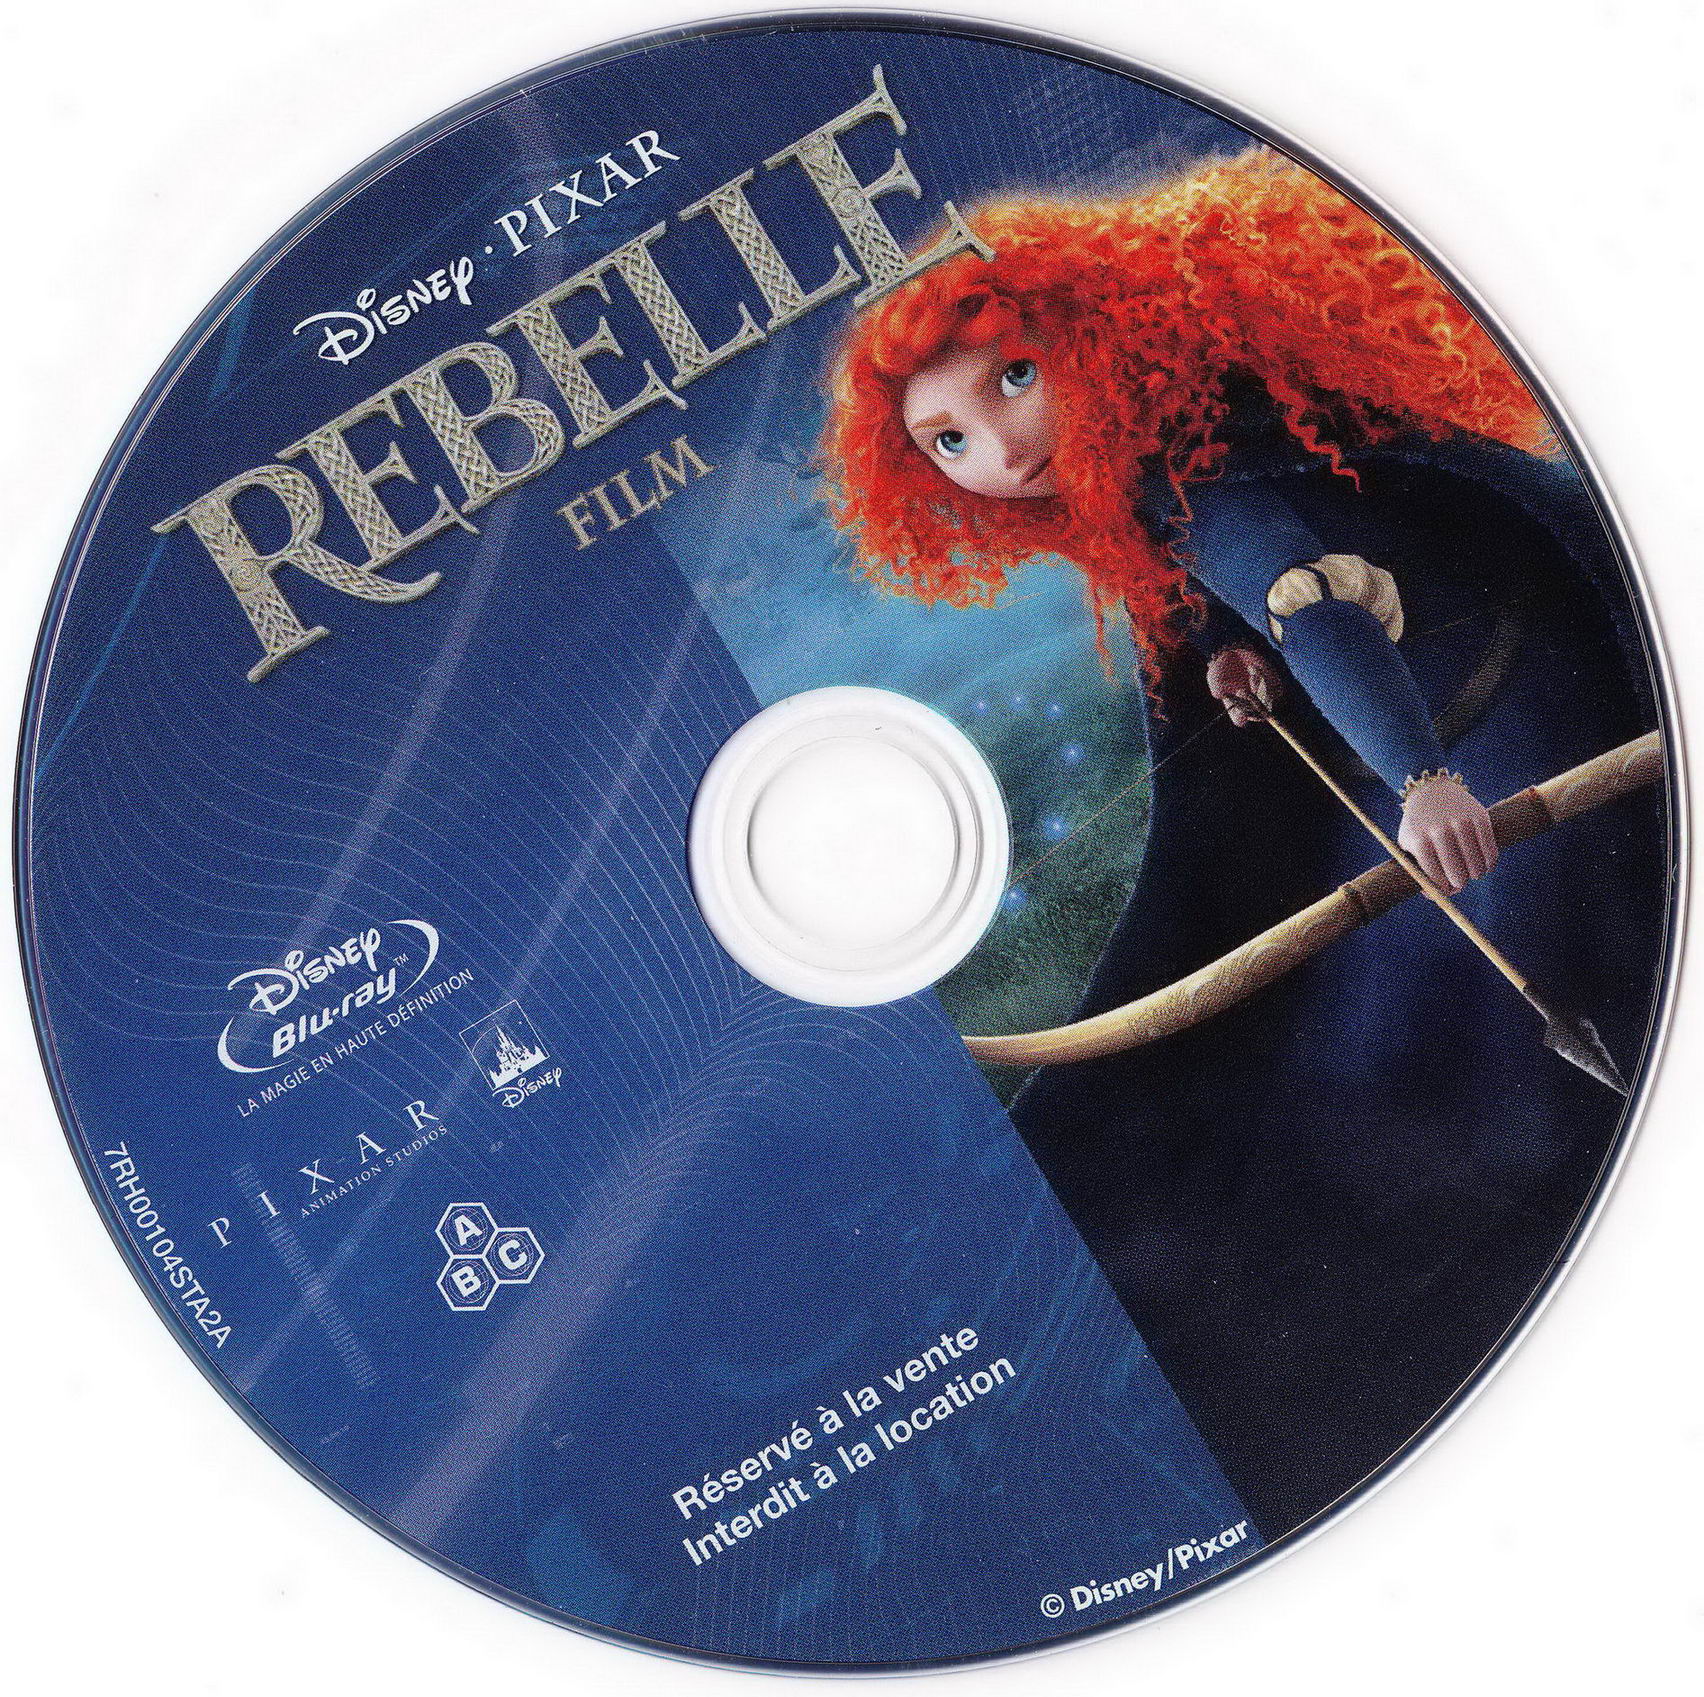 Rebelle (BLU-RAY)